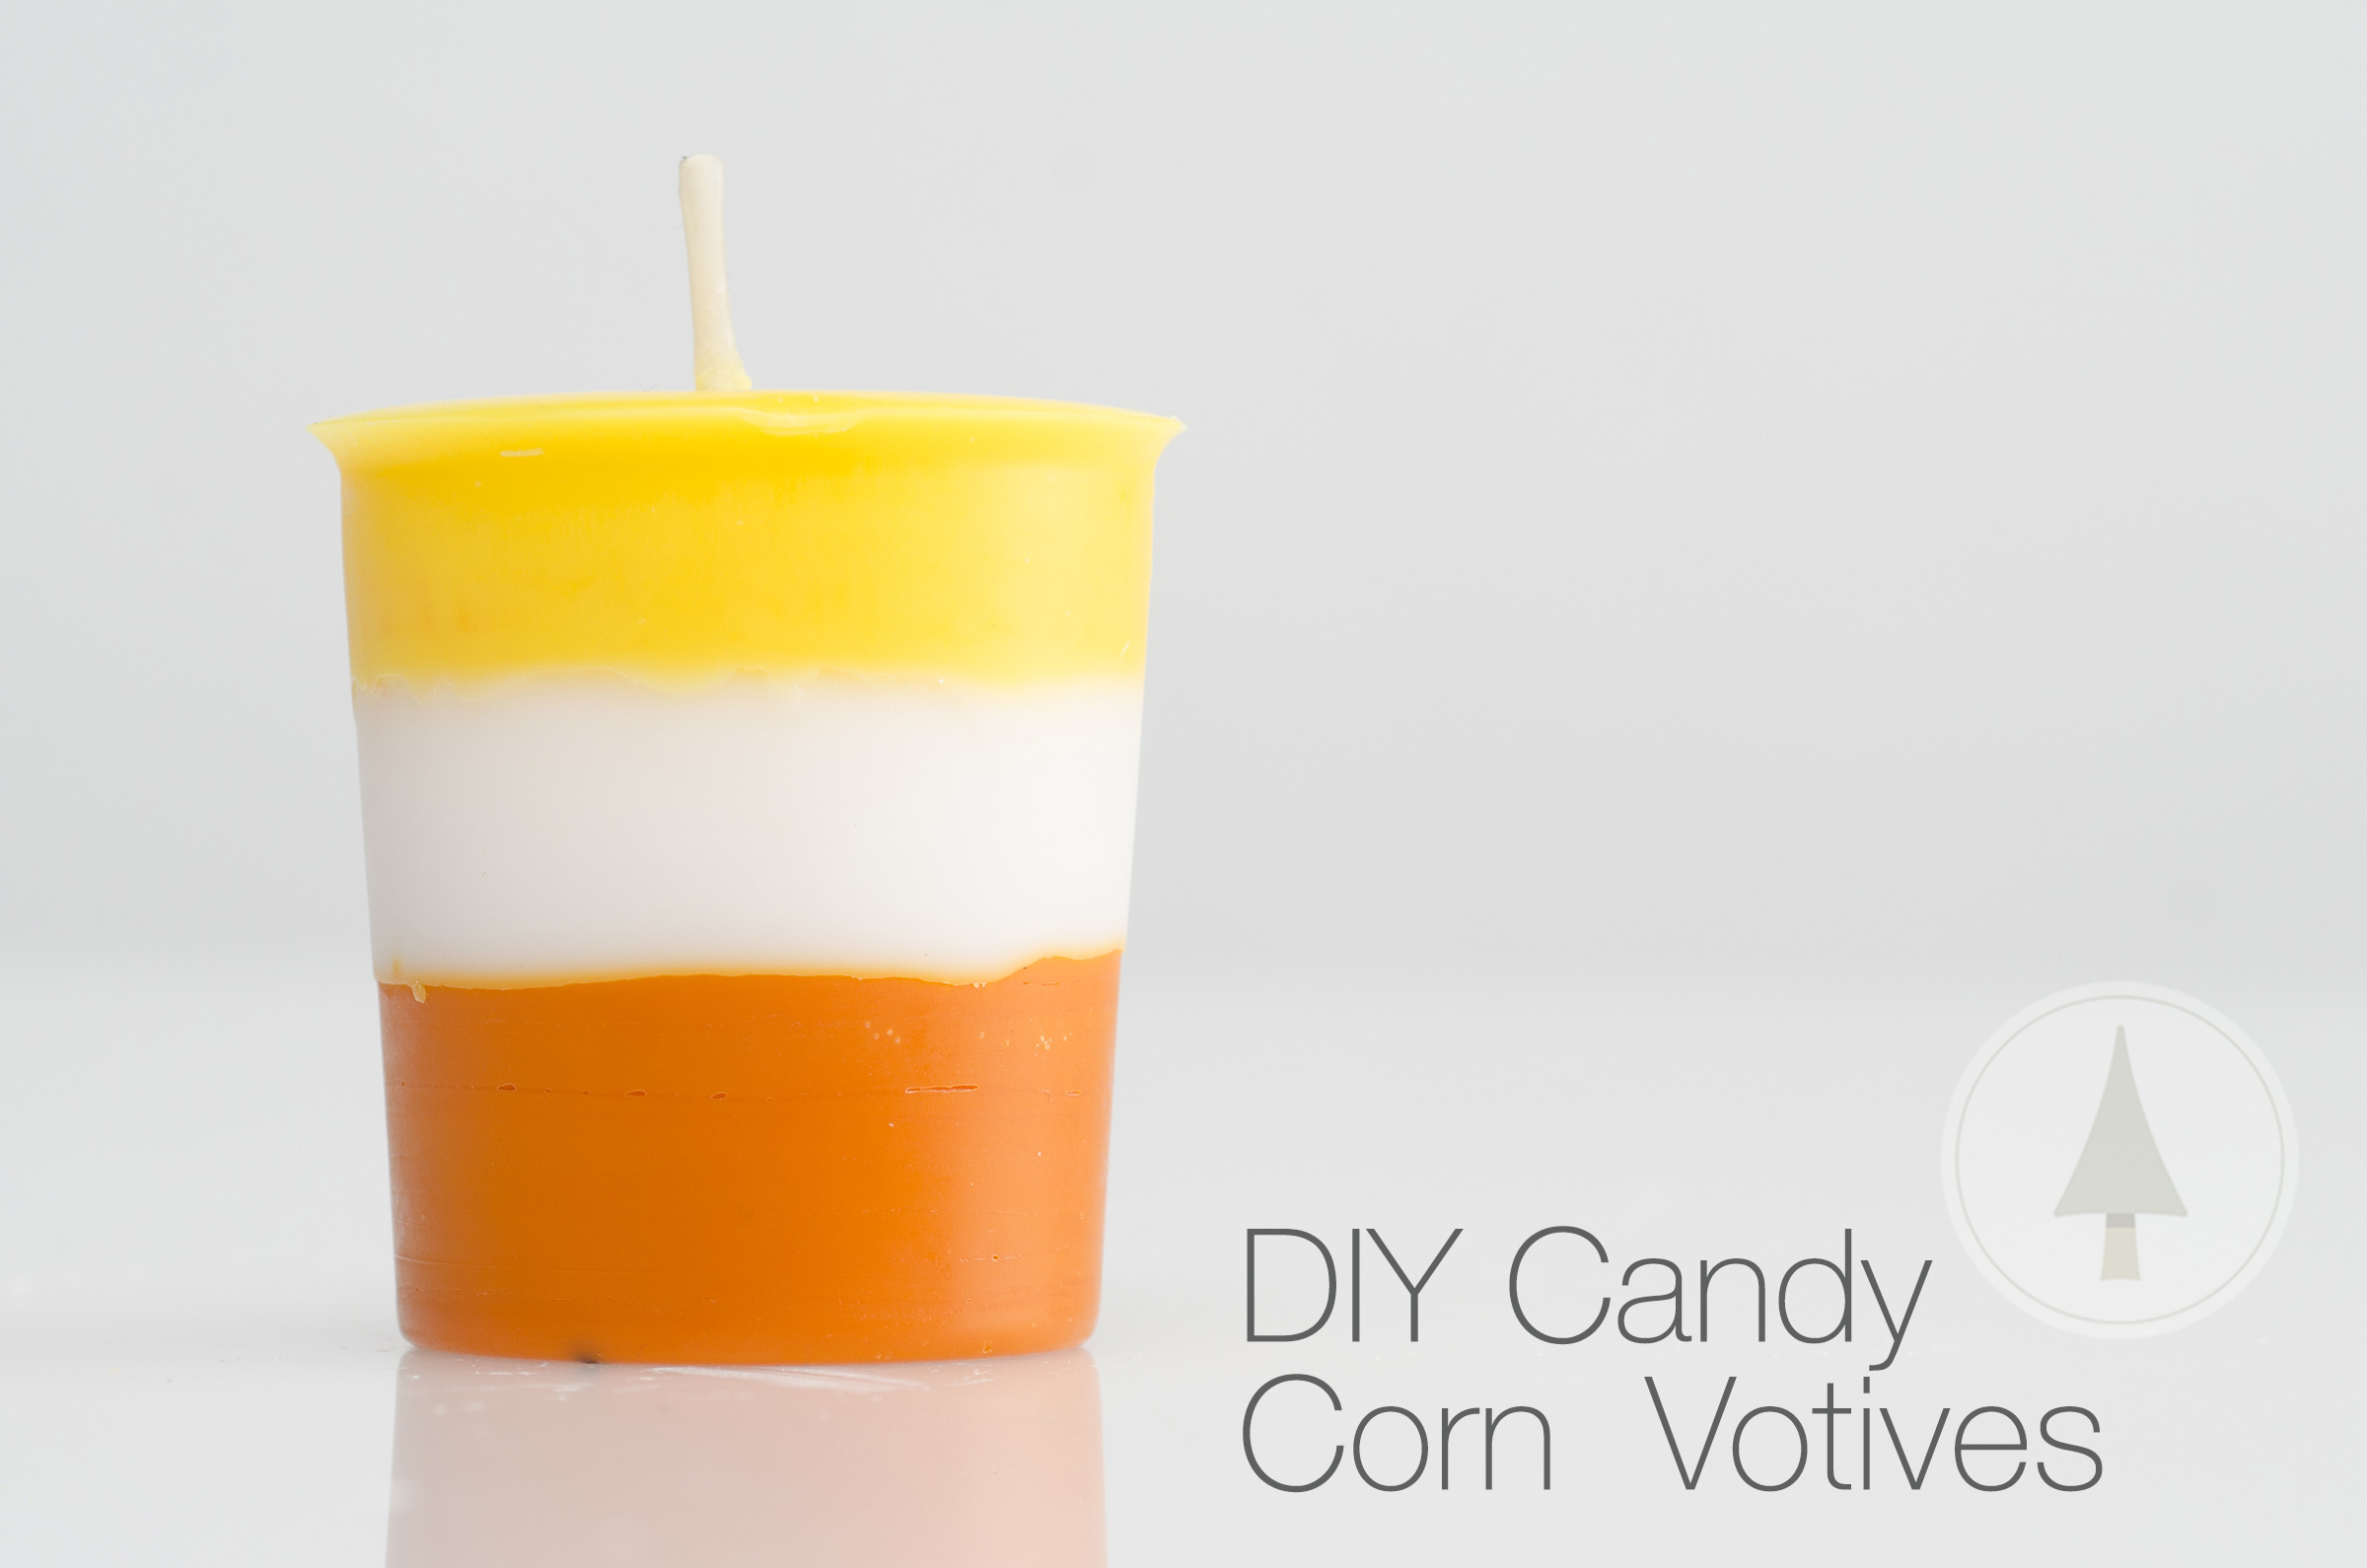 craft a sweet halloween treat - candy corn votives!